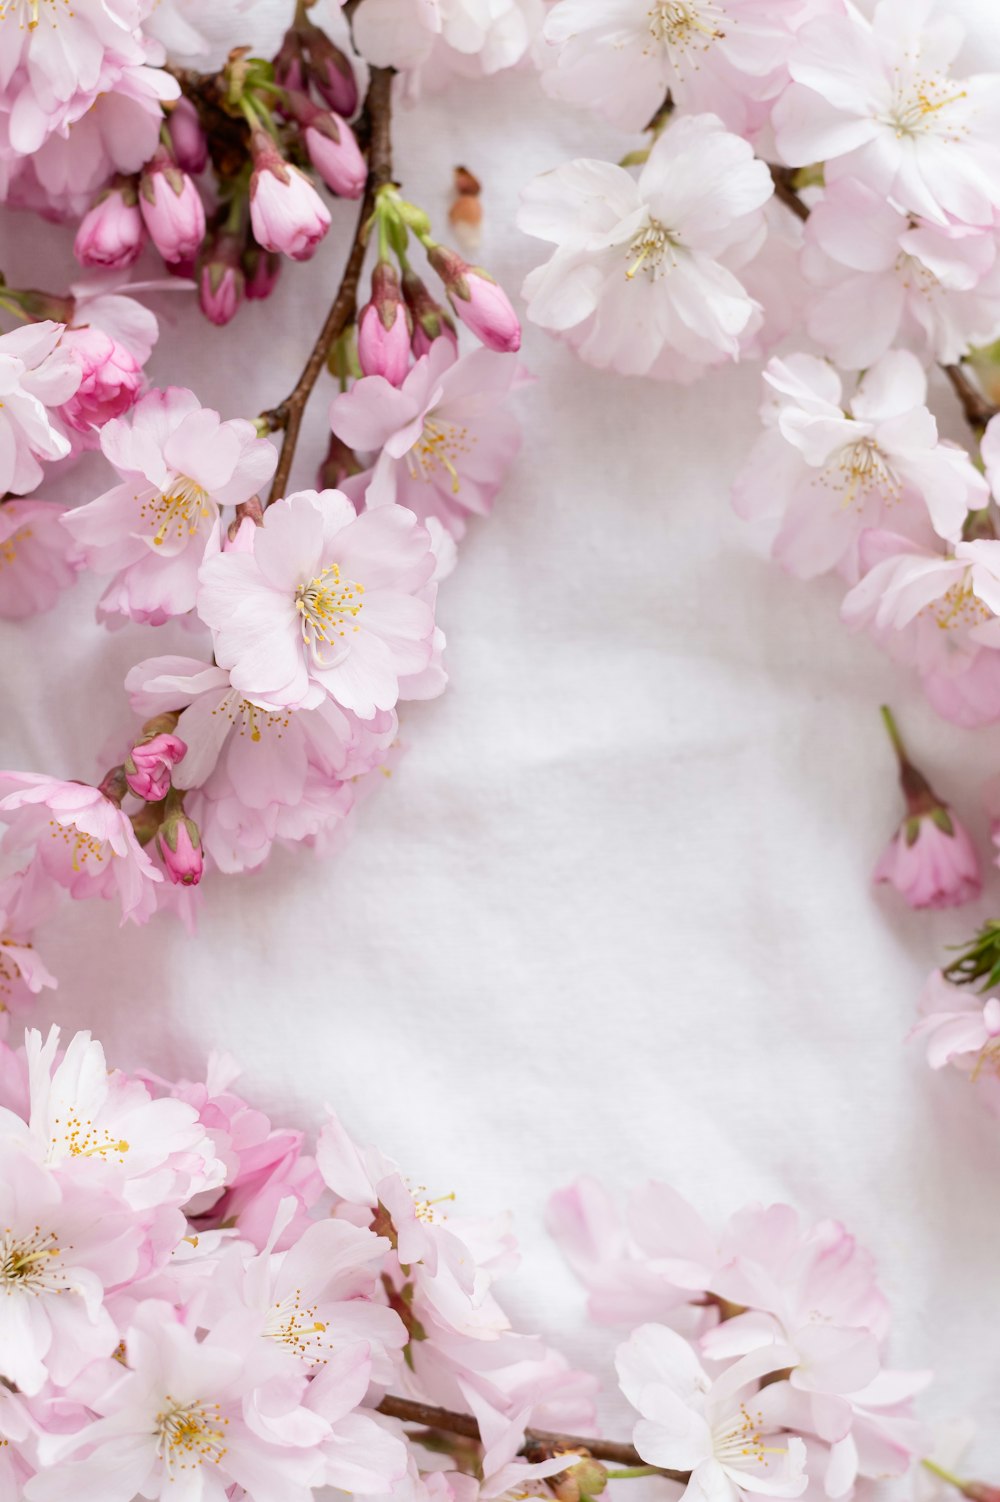 fiori rosa e bianchi su tessuto bianco